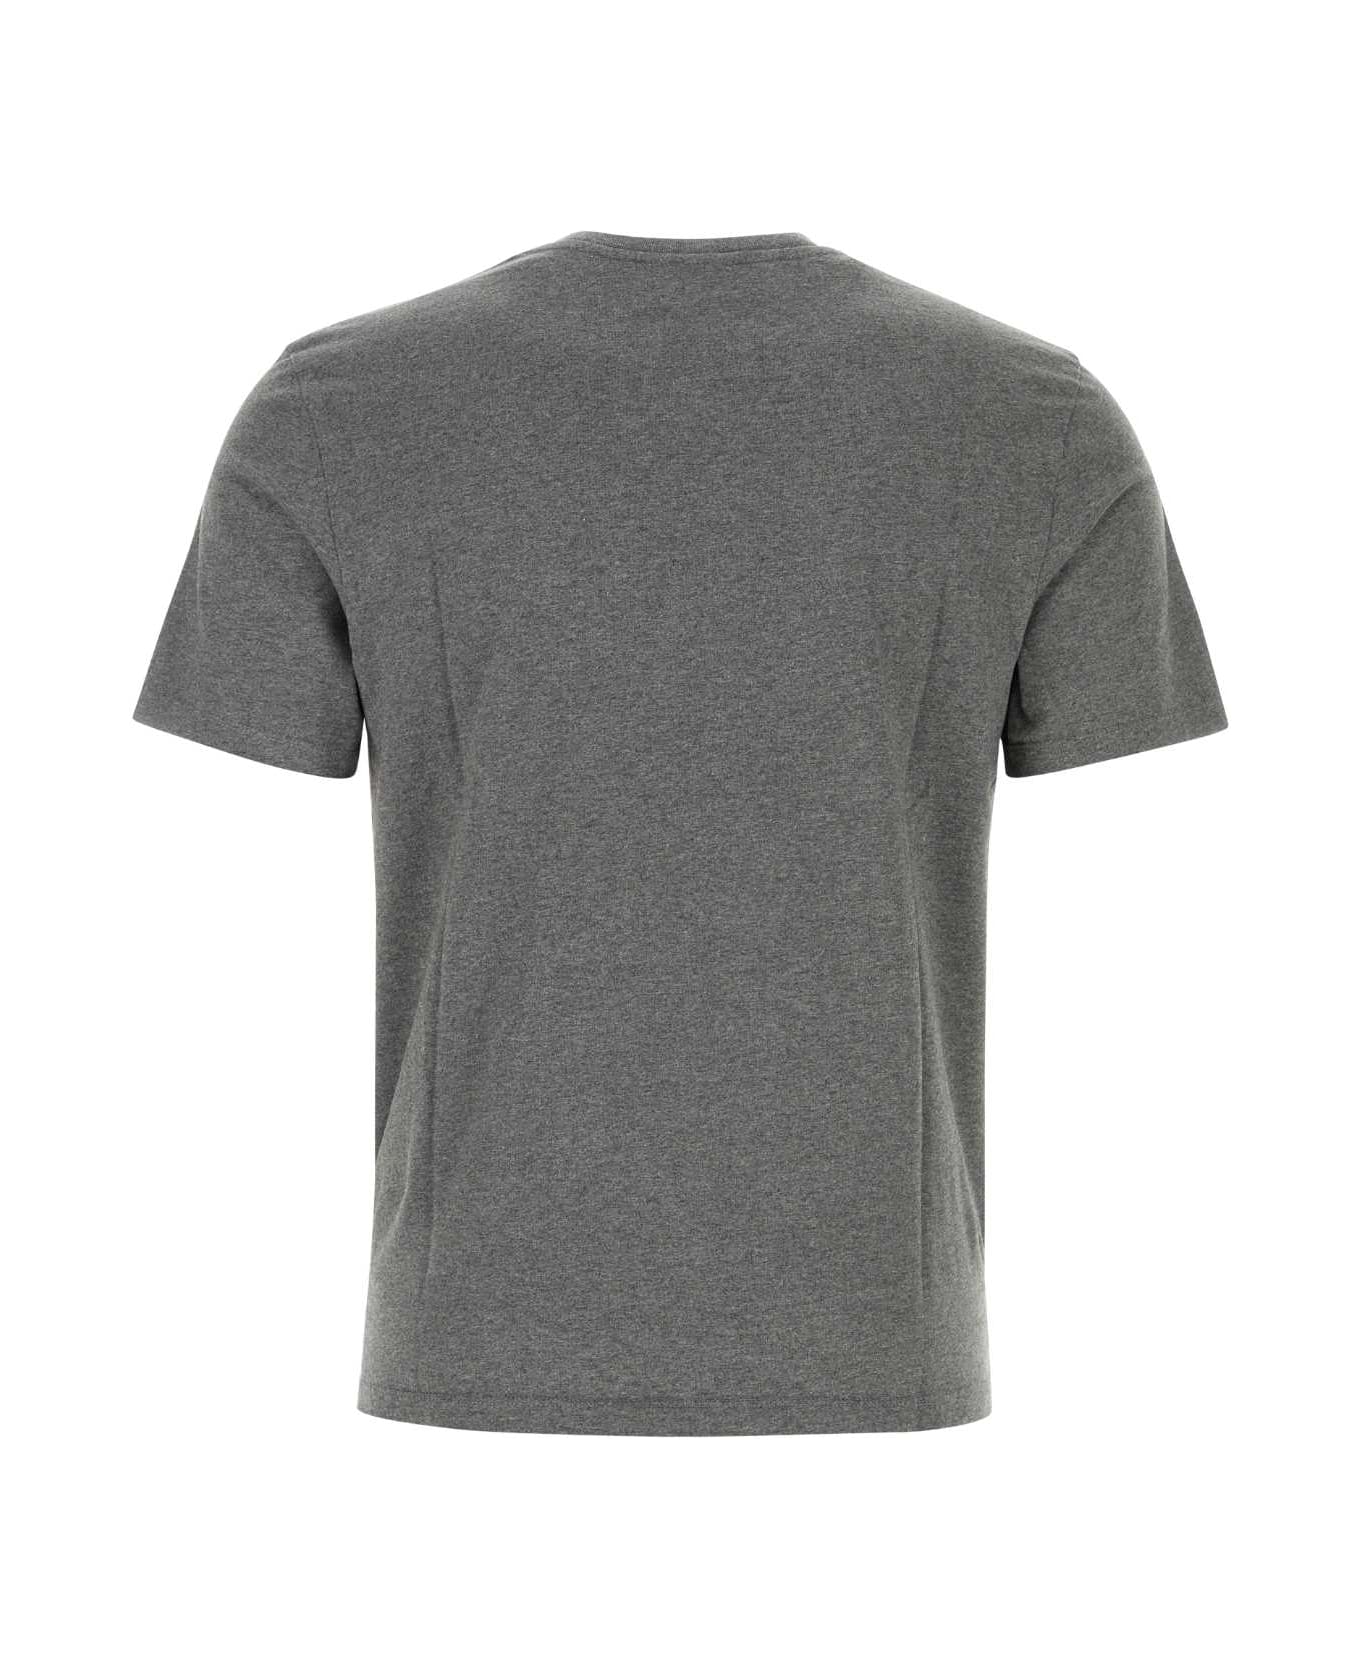 Maison Kitsuné Dark Grey Cotton T-shirt - DARKGREYMELANGE